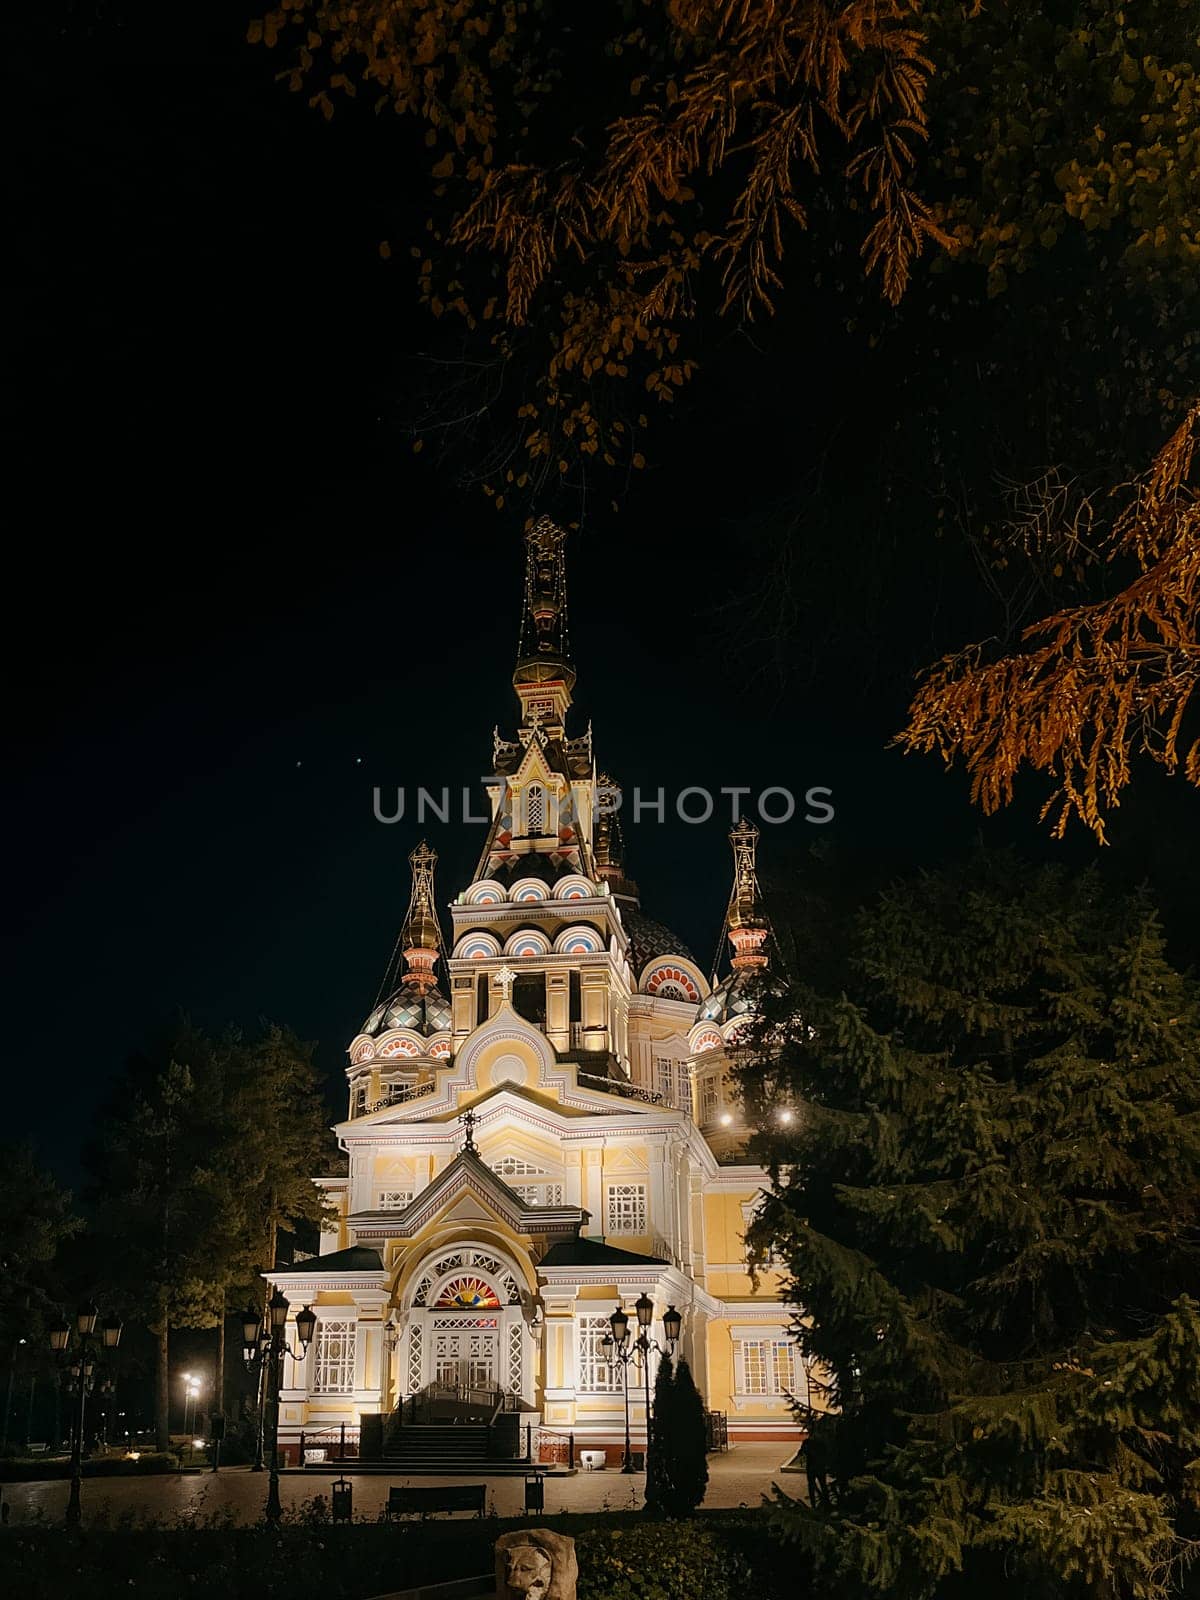 Stunning Illuminated Russian Orthodox Church with Yellow Exterior at Night by Pukhovskiy